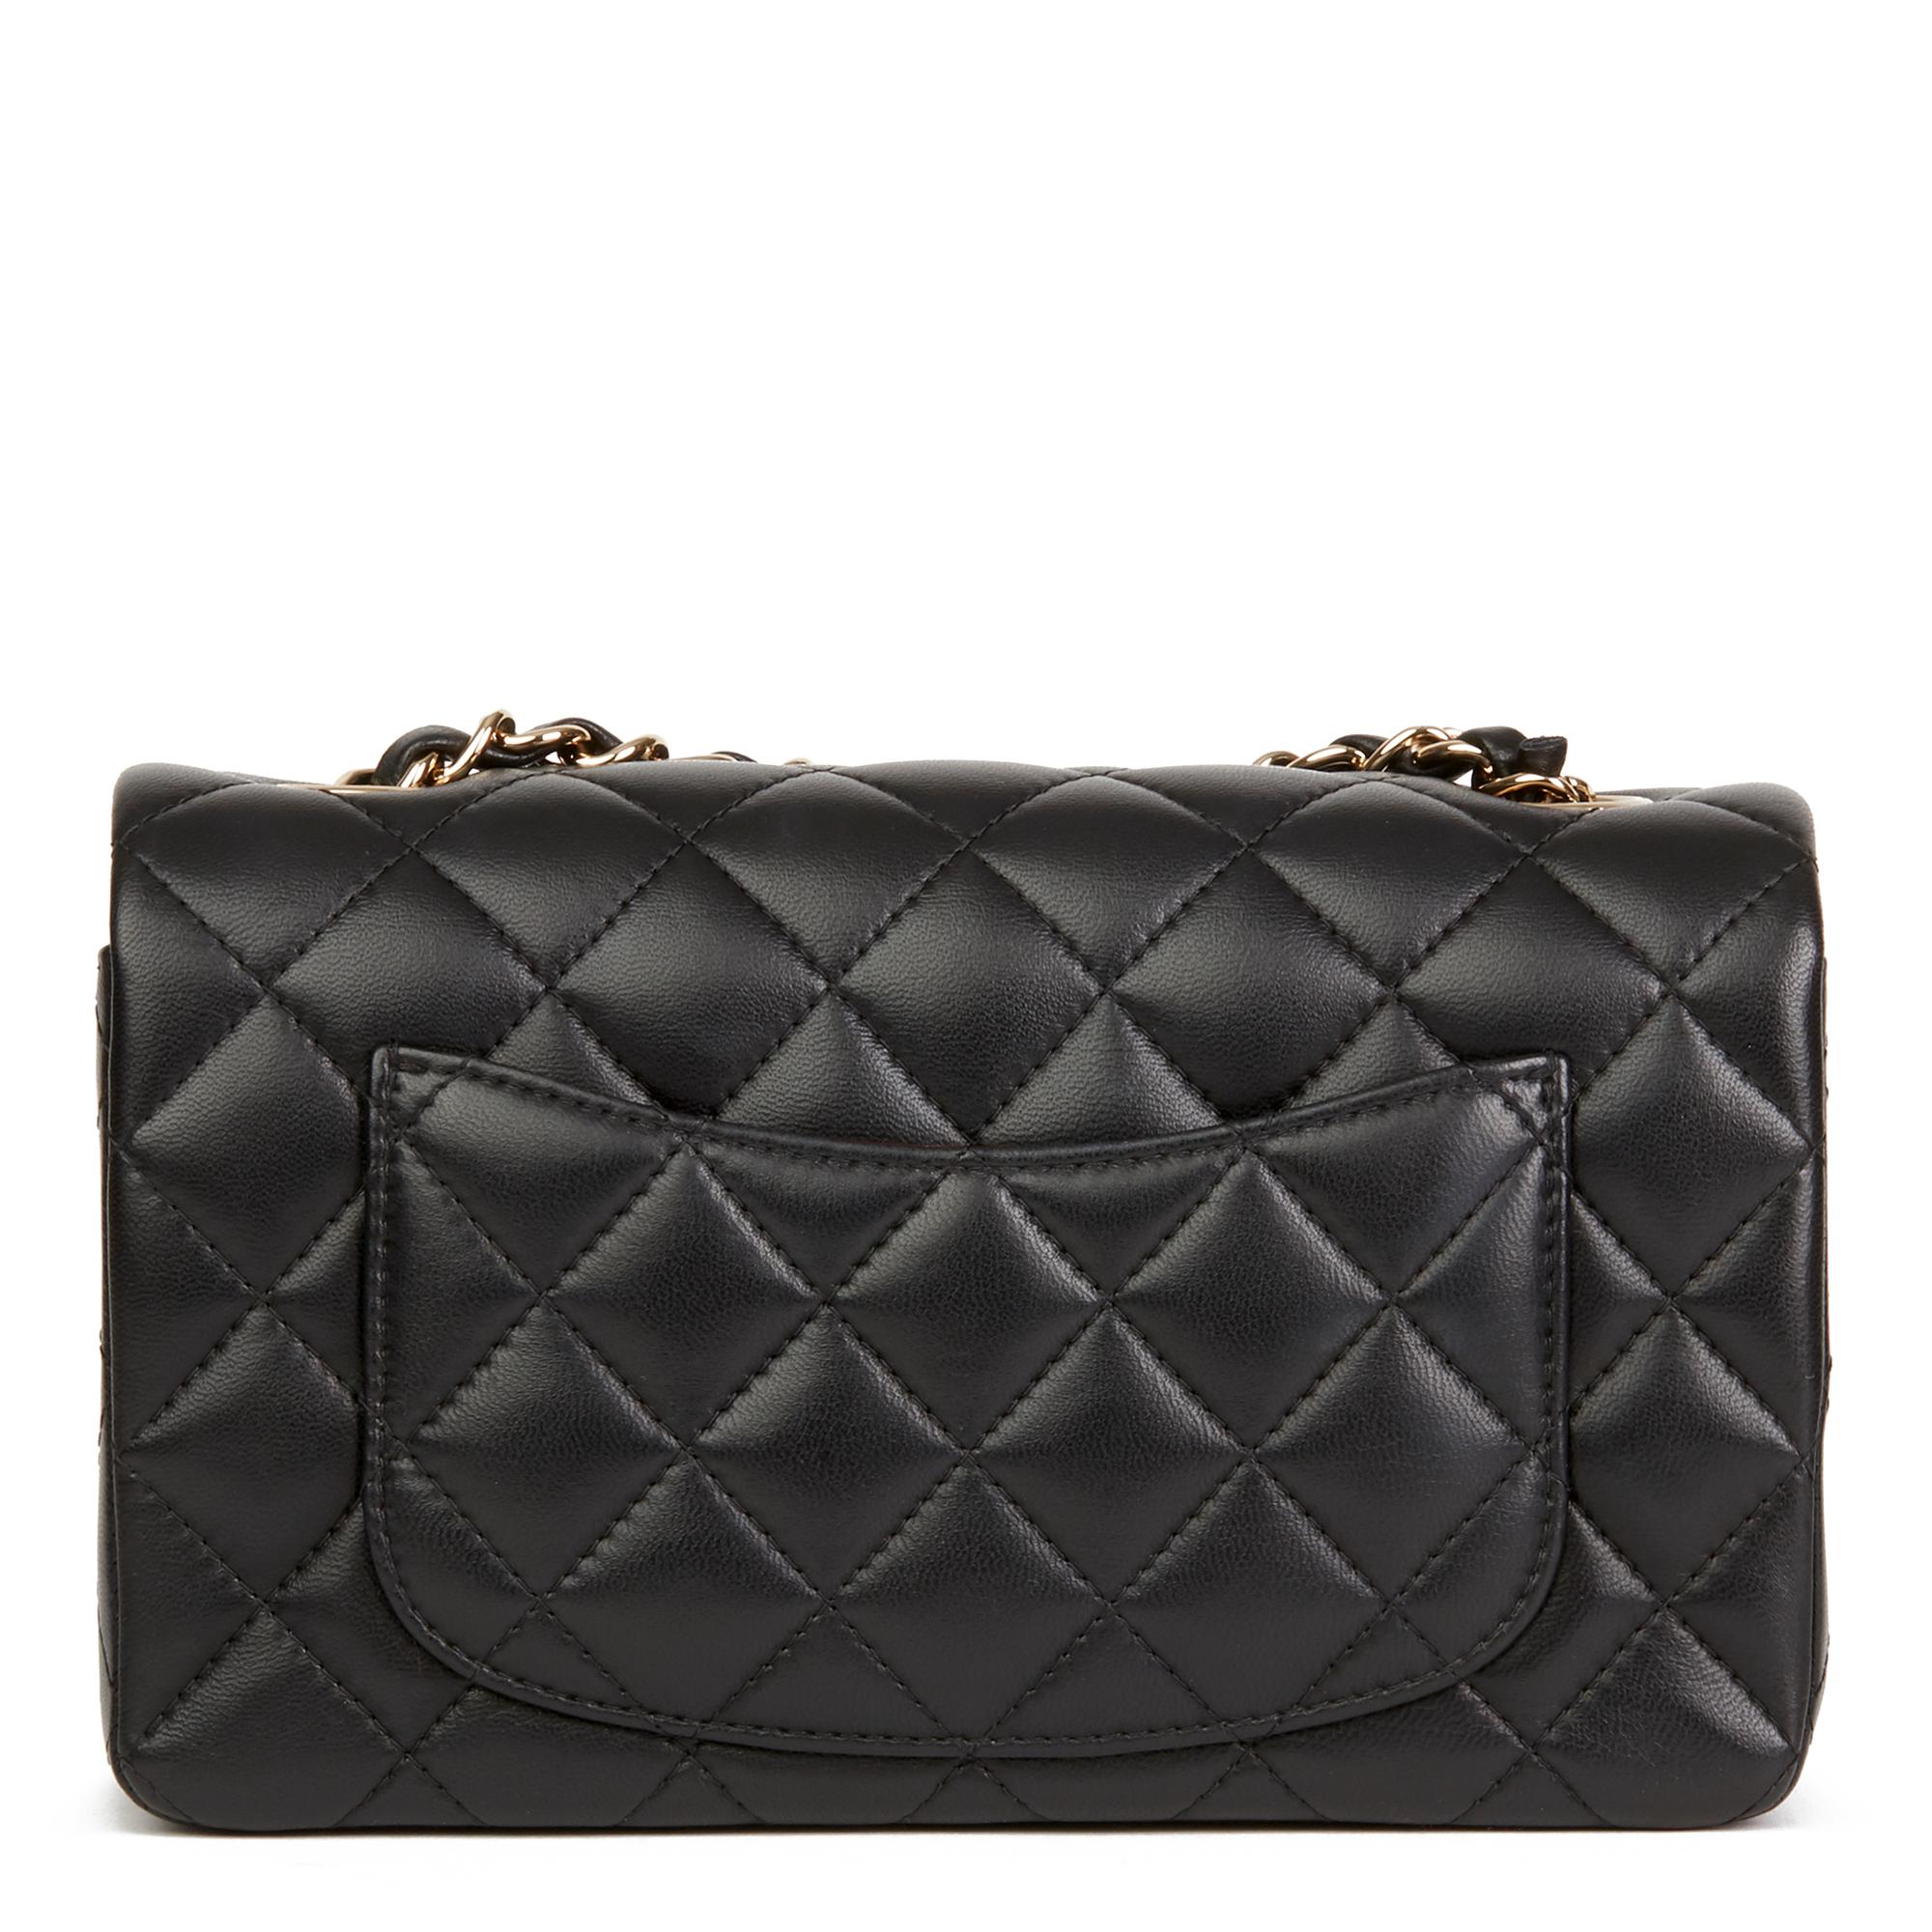 Women's 2017 Chanel Black Quilted Lambskin Rectangular Mini Flap Bag